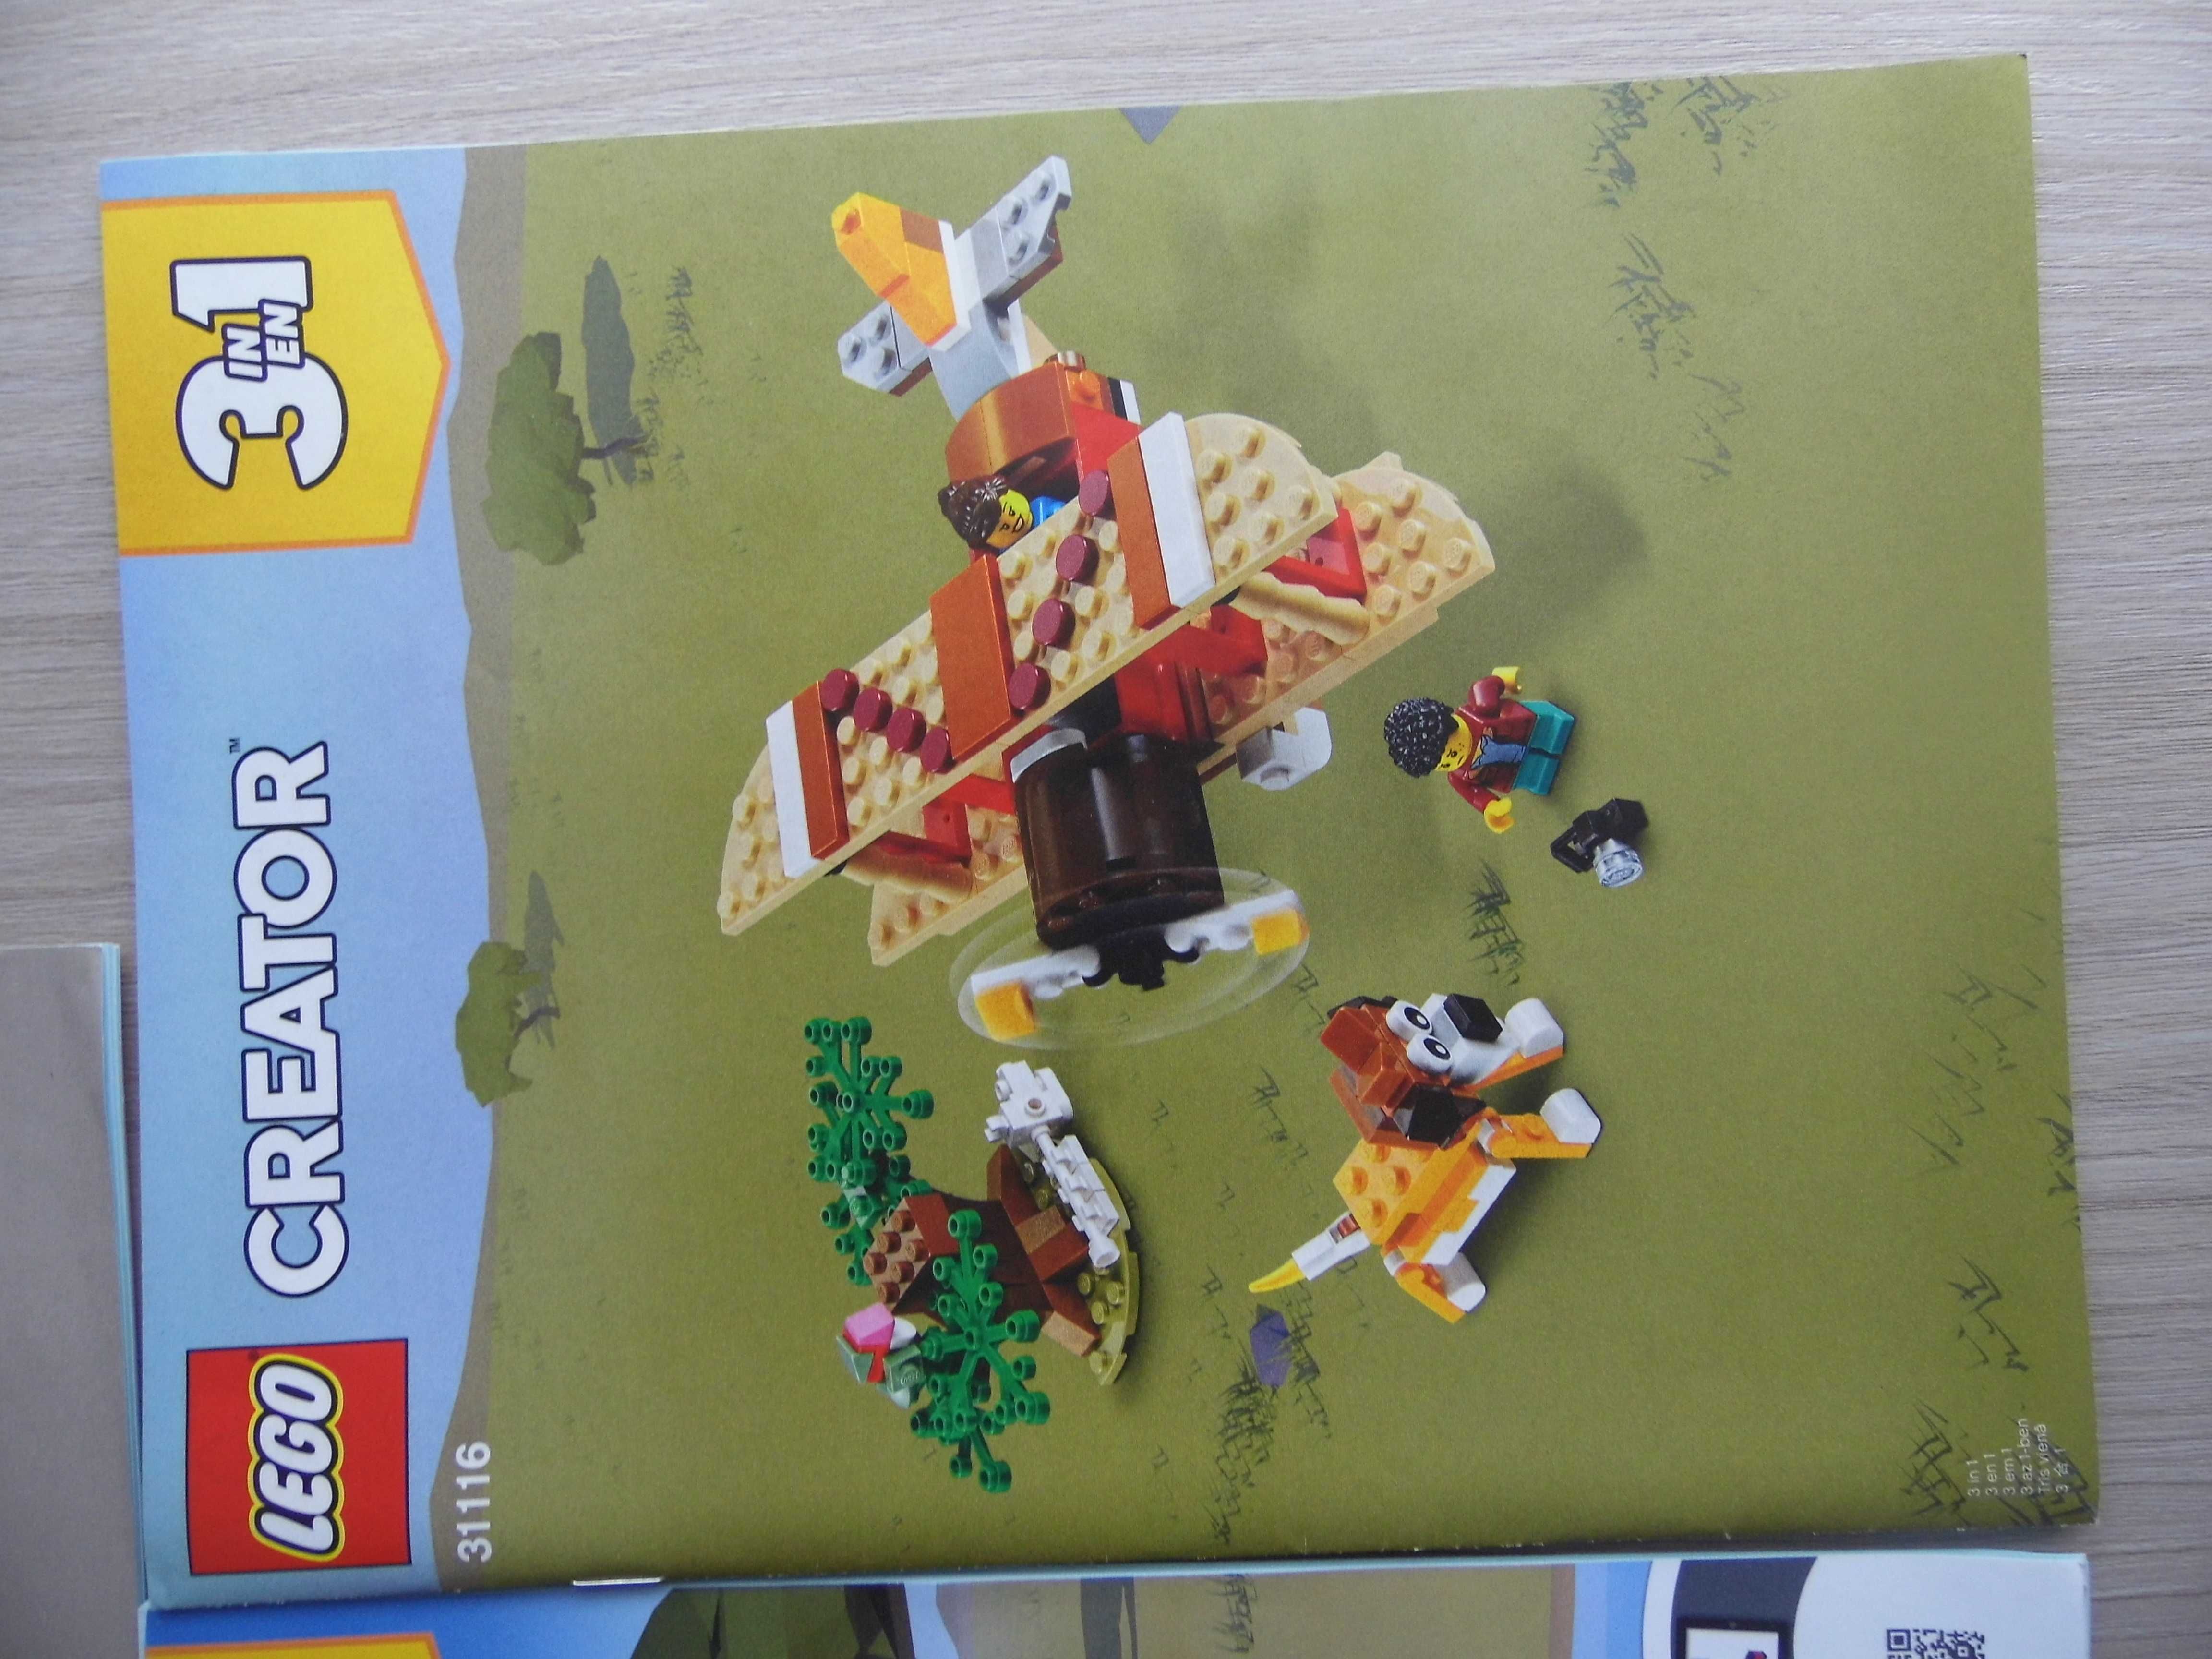 LEGO Creator 3 w 1 31116 Domek na drzewie na safari